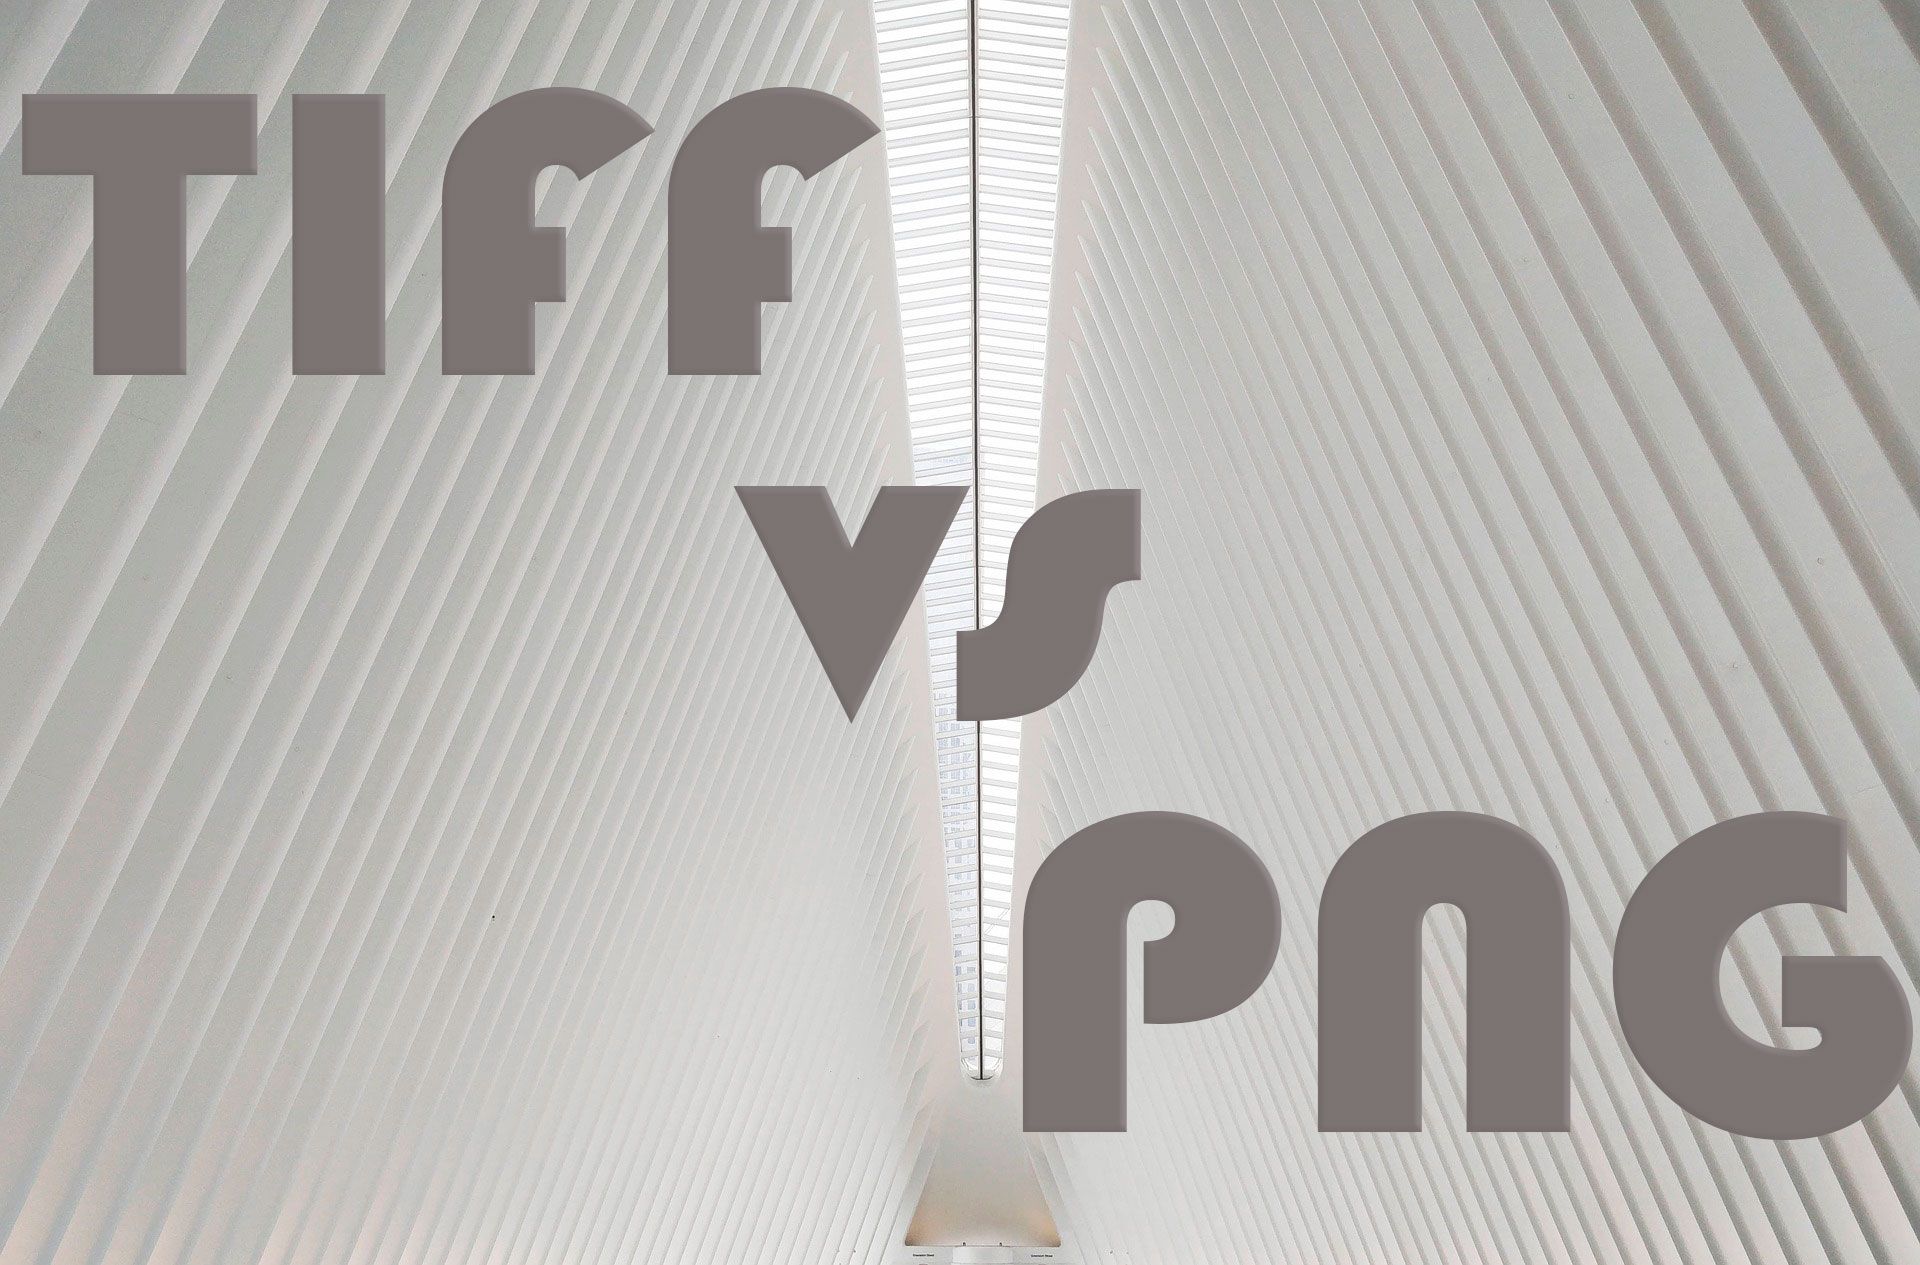 TIFF versus PNG..